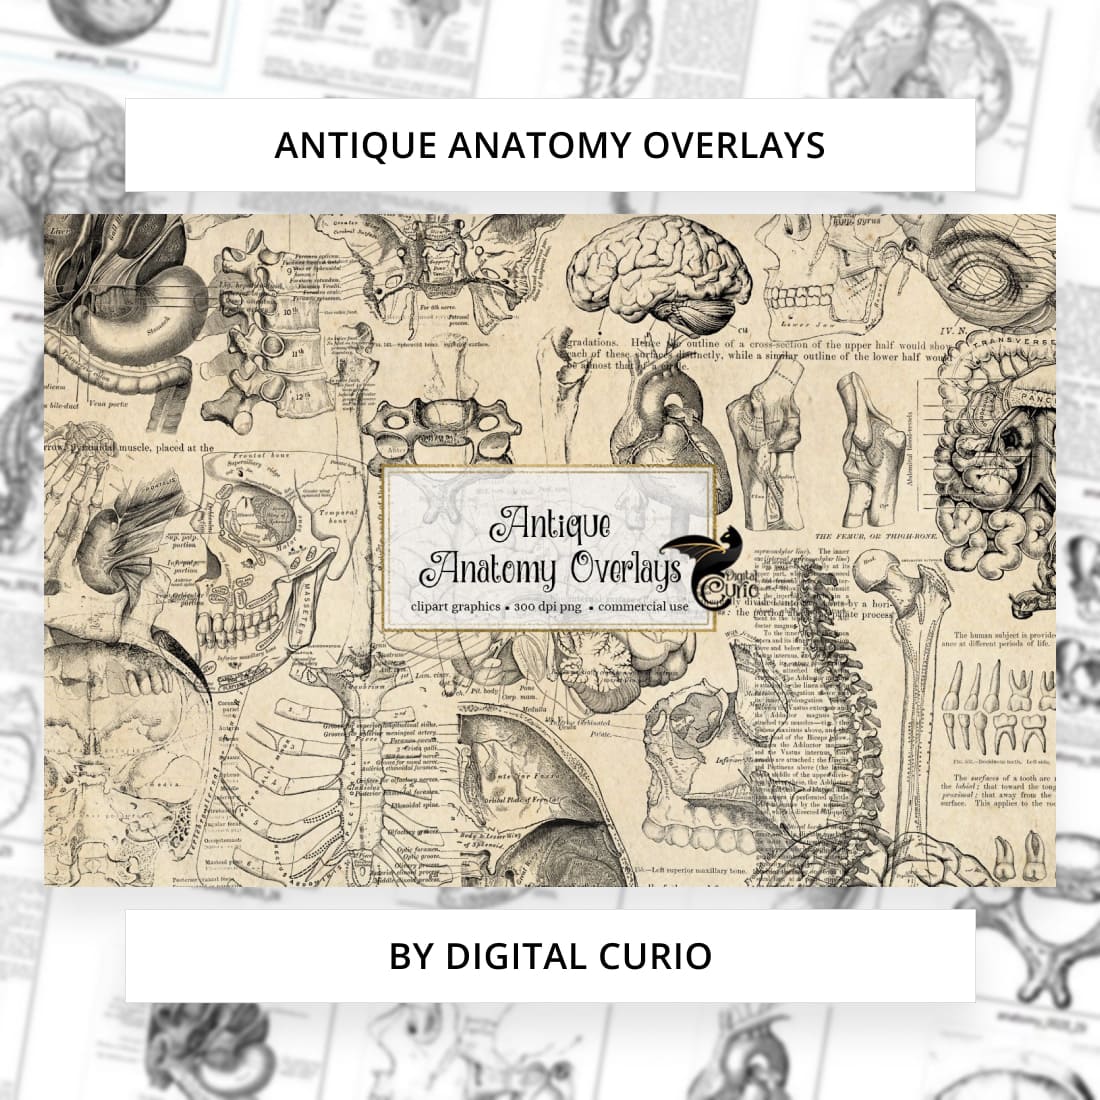 Antique Anatomy Overlays main cover.